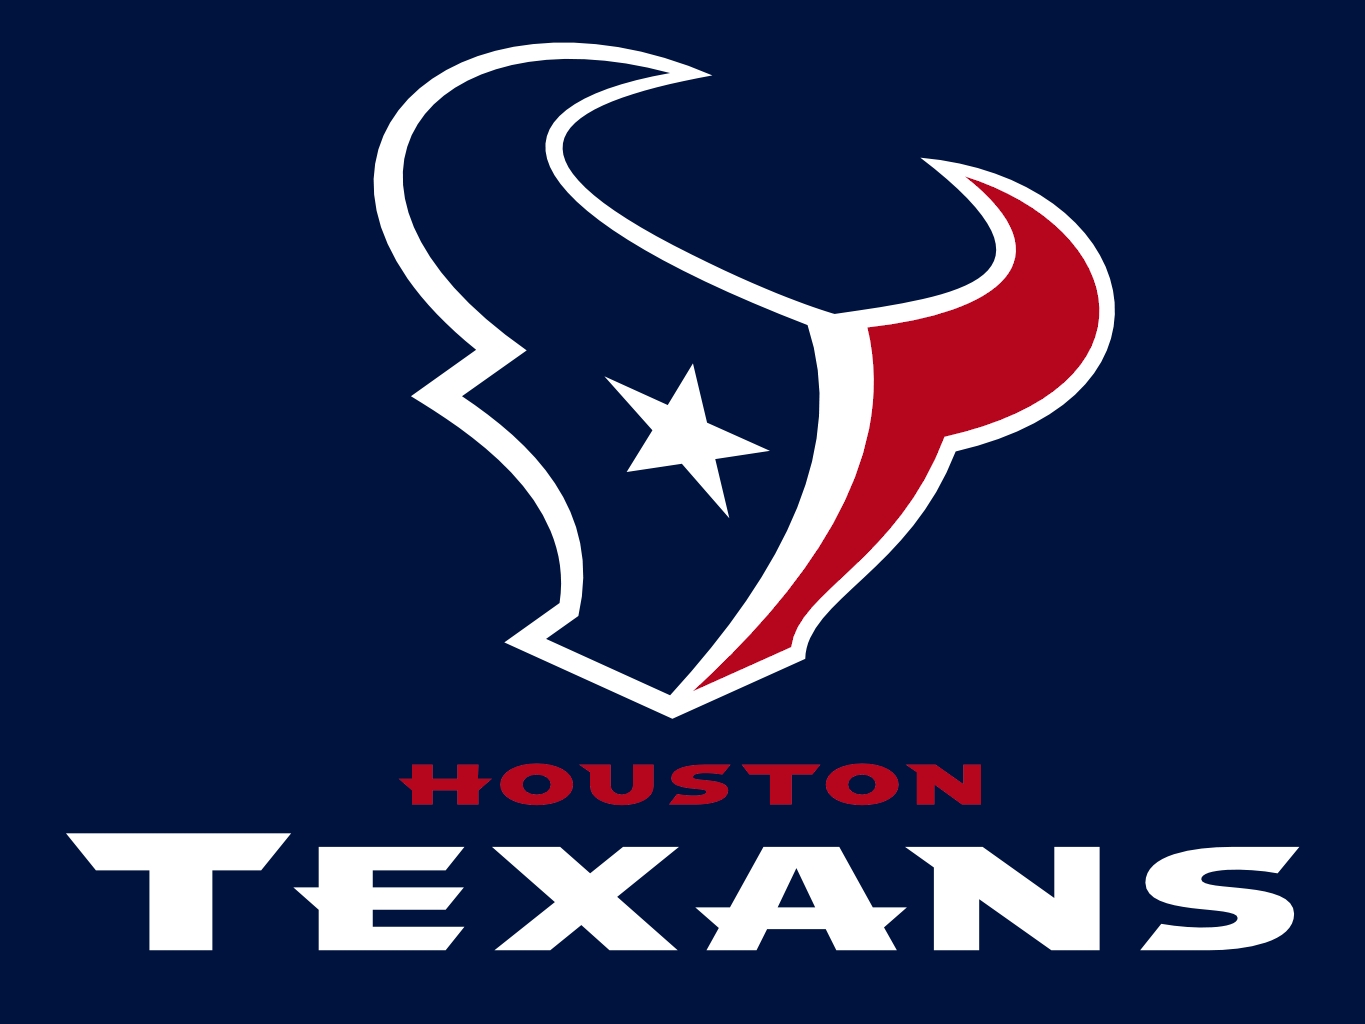 NFL Teams ? Houston Texans - Collins Flags Blog